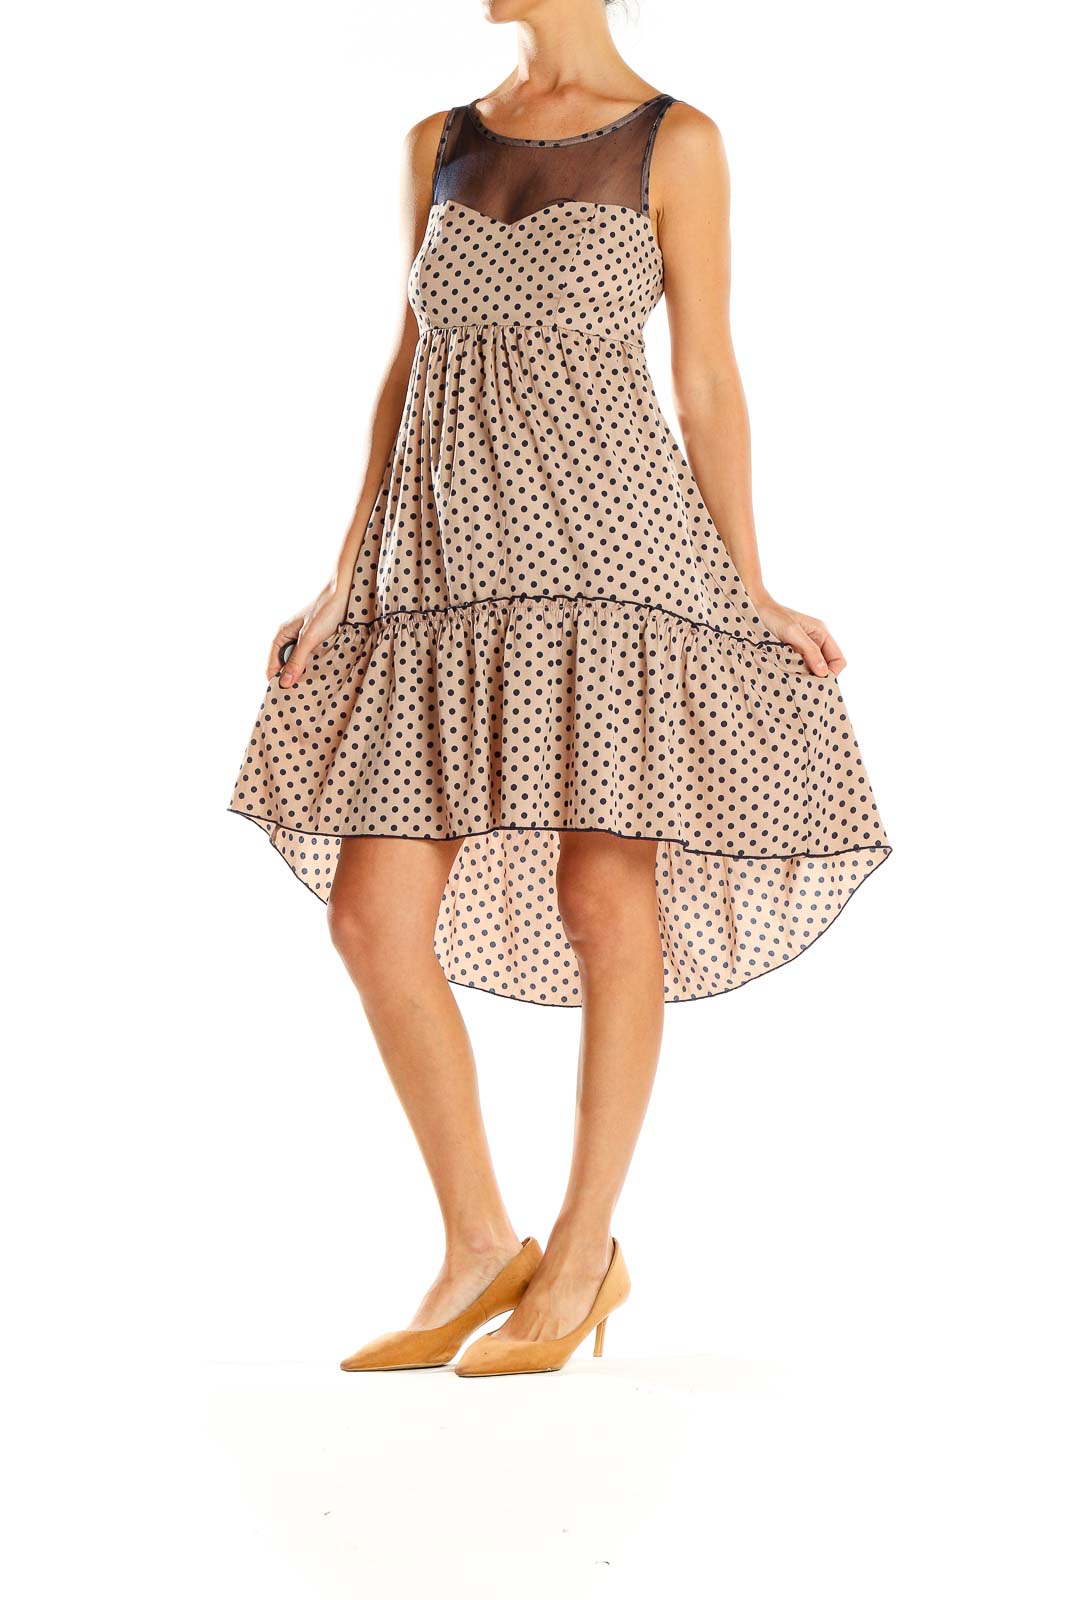 American Rag Cie - Beige Polka Dot High Low Dress Polyester Rayon